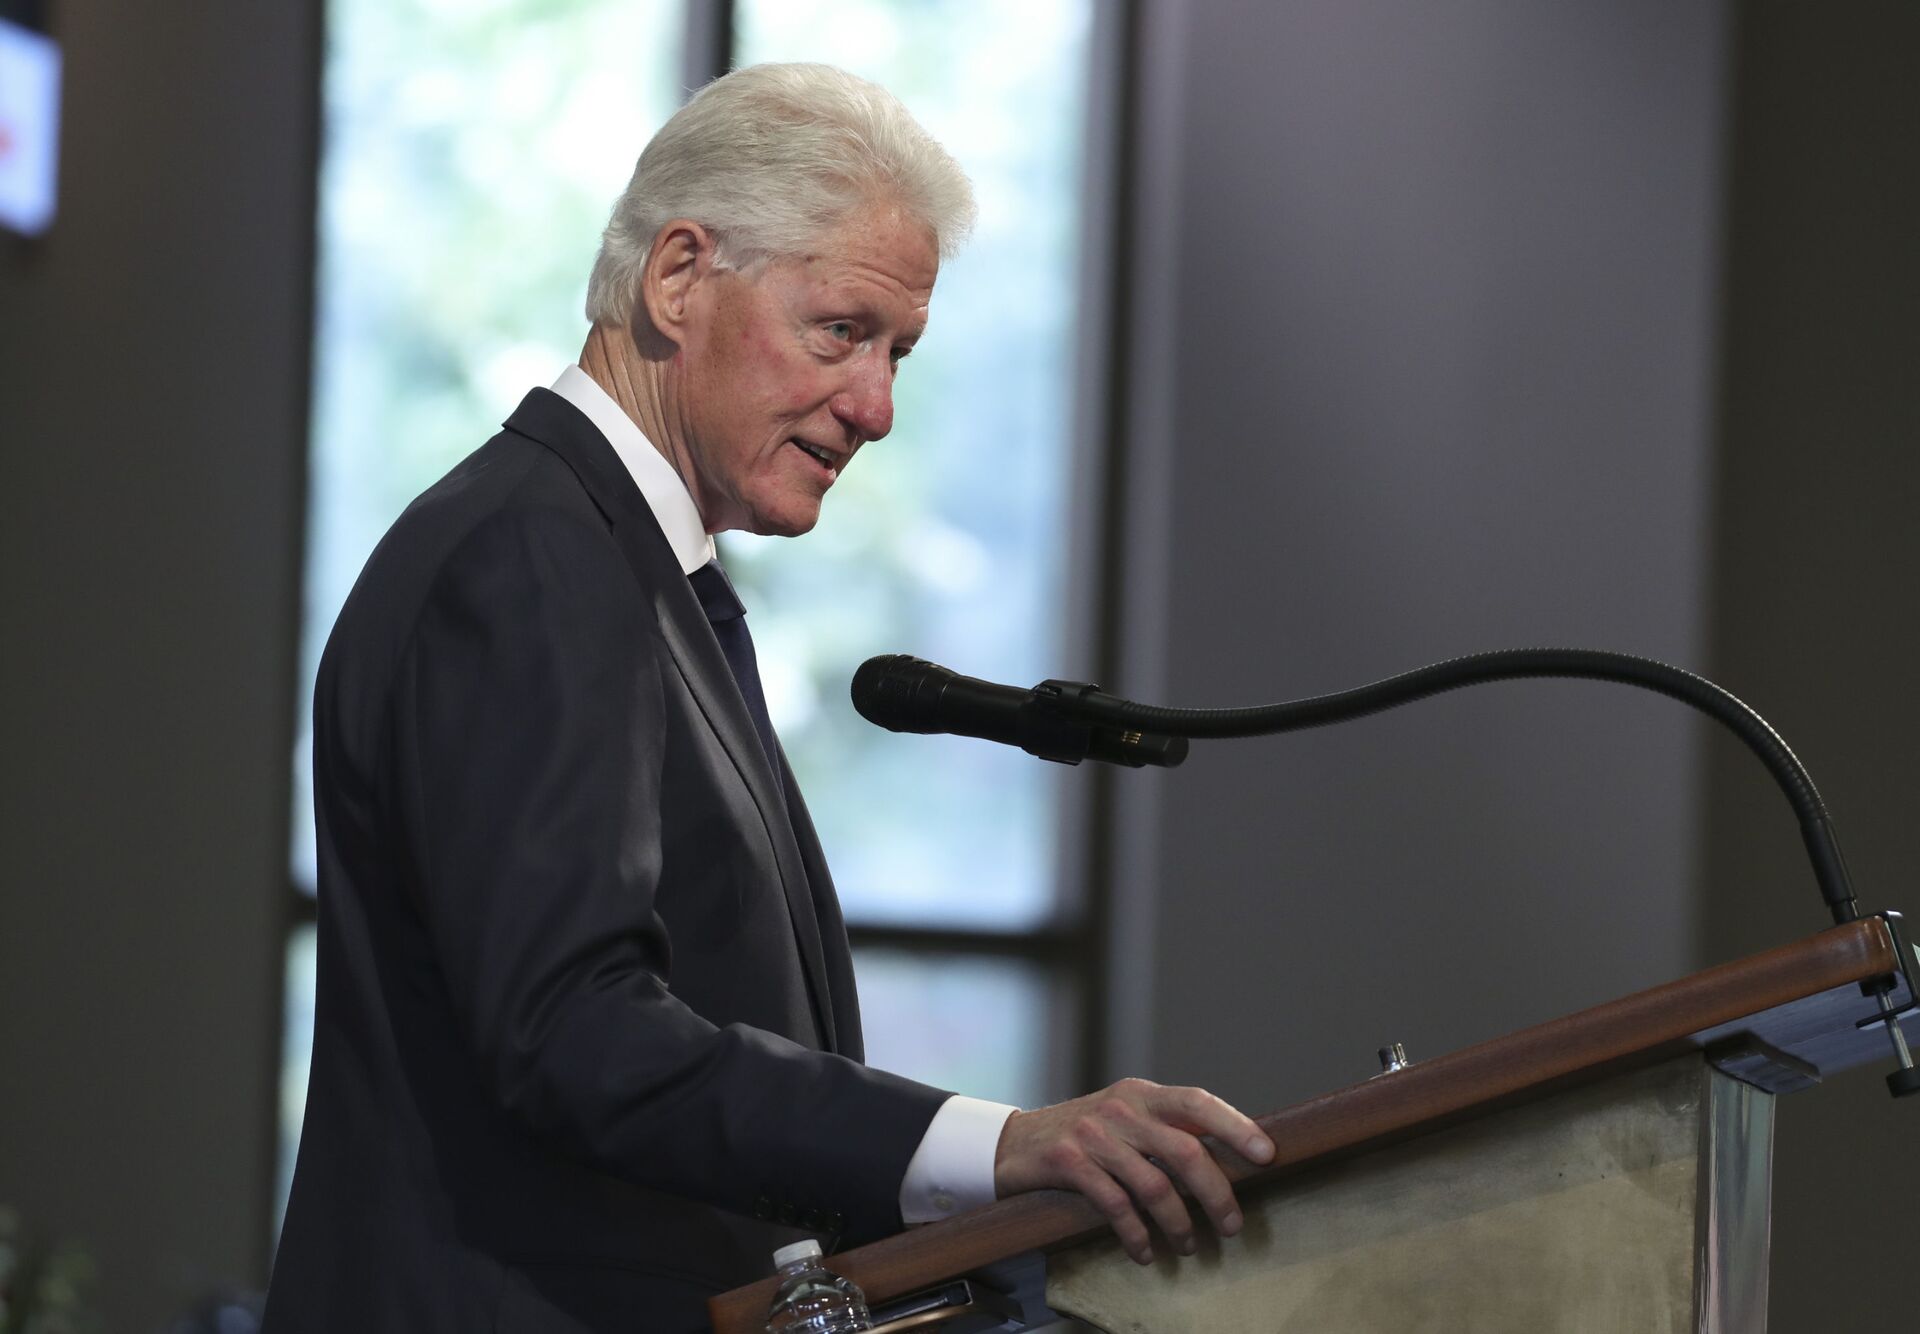 Former President Bill Clinton speaks during the funeral service for the late Rep. John Lewis, D-Ga., at Ebenezer Baptist Church in Atlanta, Thursday, July 30, 2020. - Sputnik International, 1920, 04.05.2022